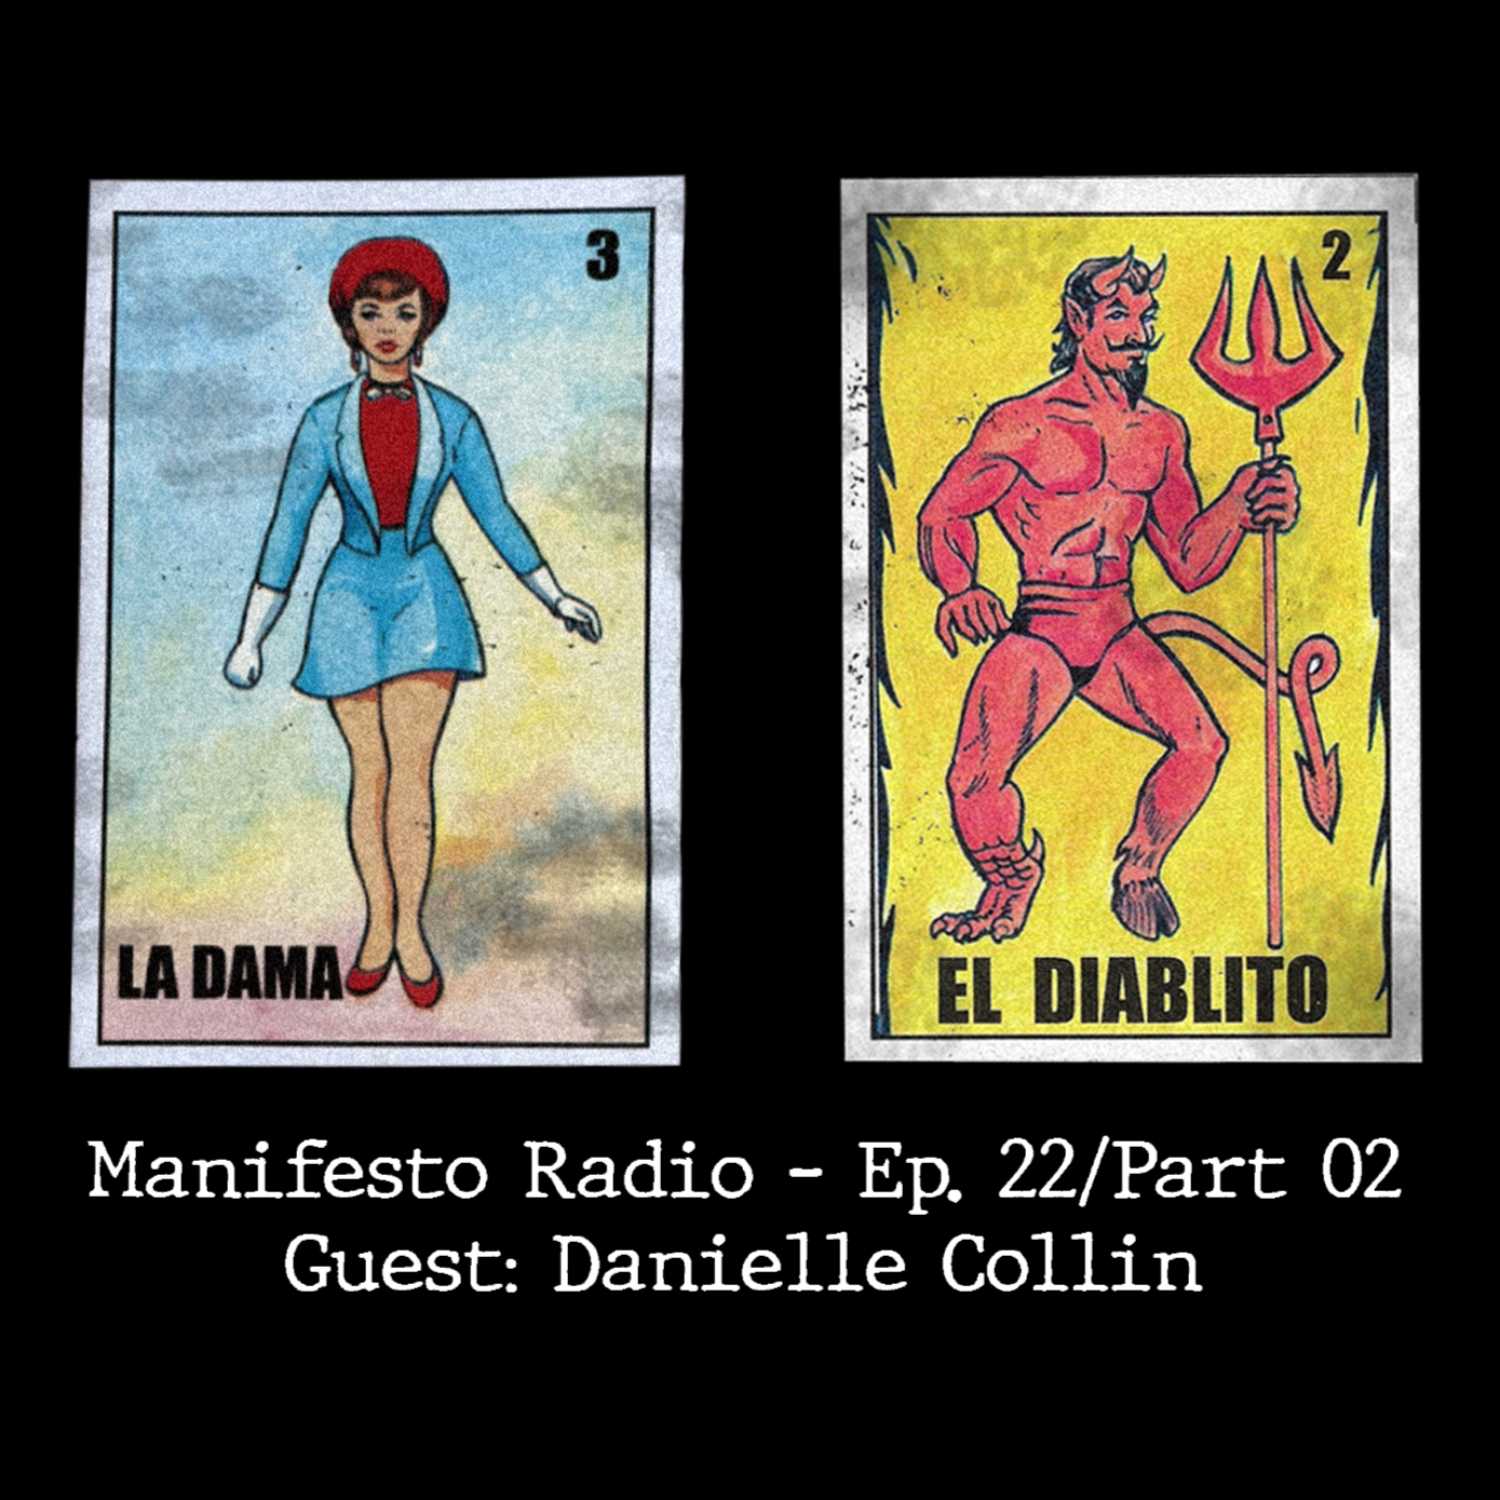 Manifesto Radio Ep22 / Part 02 - Guest: Danielle Collins